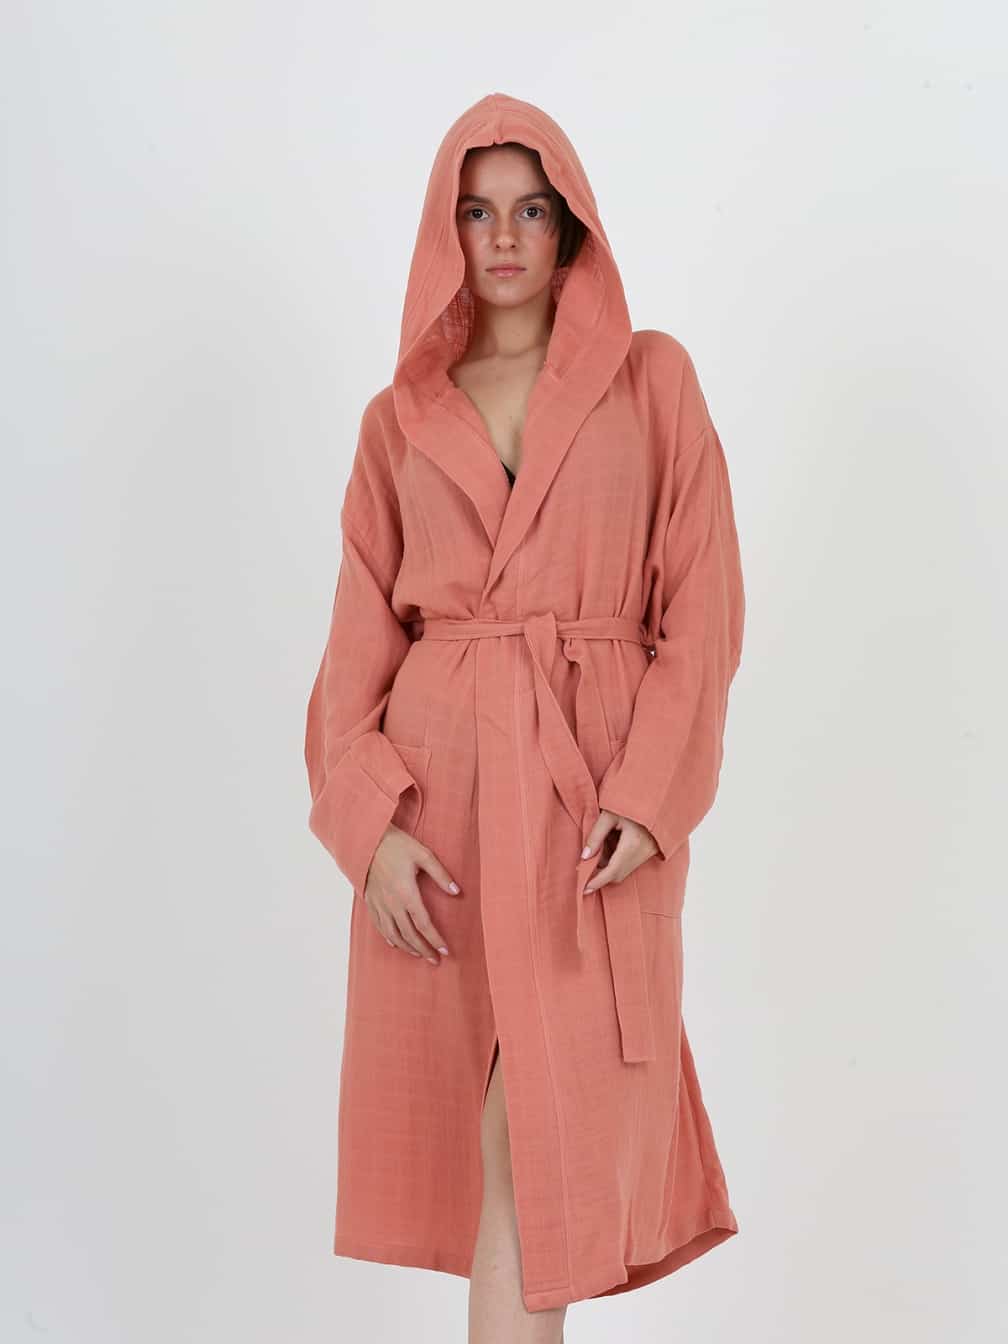 motto-crinkle-bathrobe-4-layer-peshtemal-turkish-linen-supply-wholesaler-home-wear-muslin-fabric